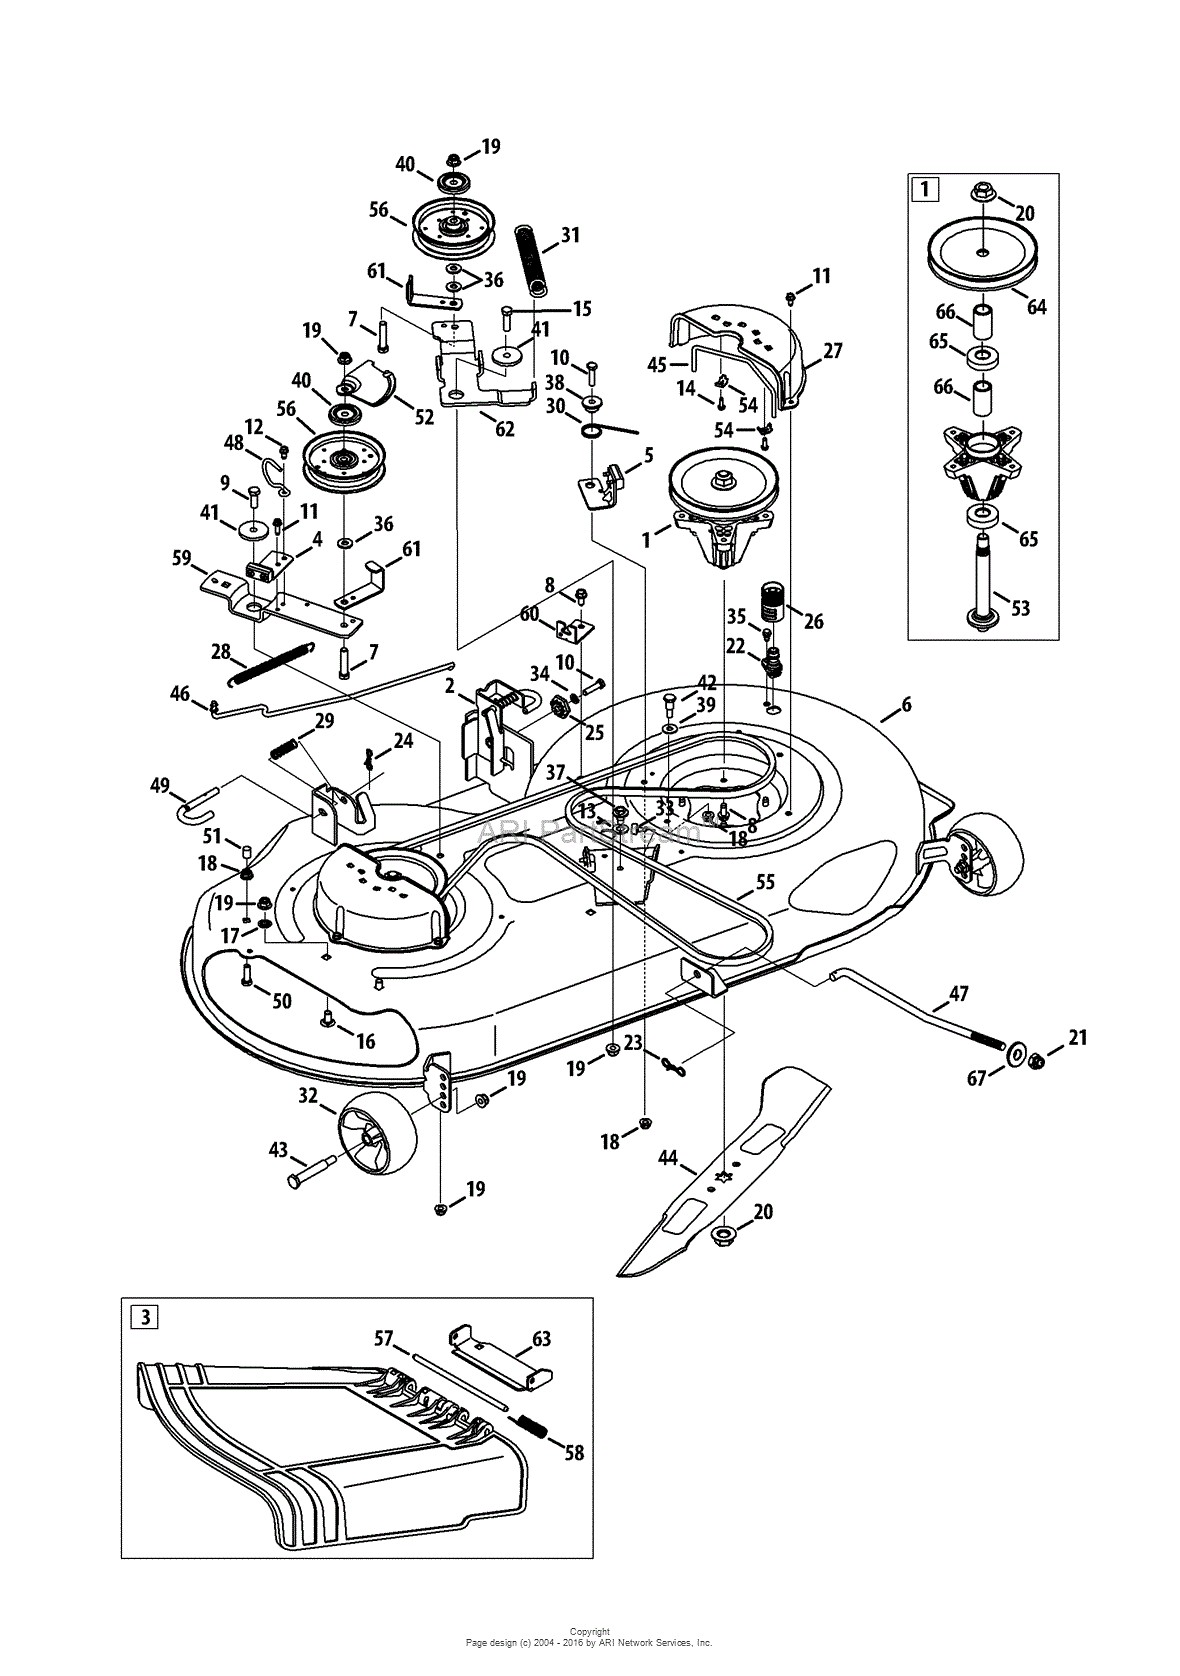 Craftsman Riding Mower Engine Diagram Mtd 13bl78st099 247 Lt2000 2013 Parts Diagrams Of Craftsman Riding Mower Engine Diagram